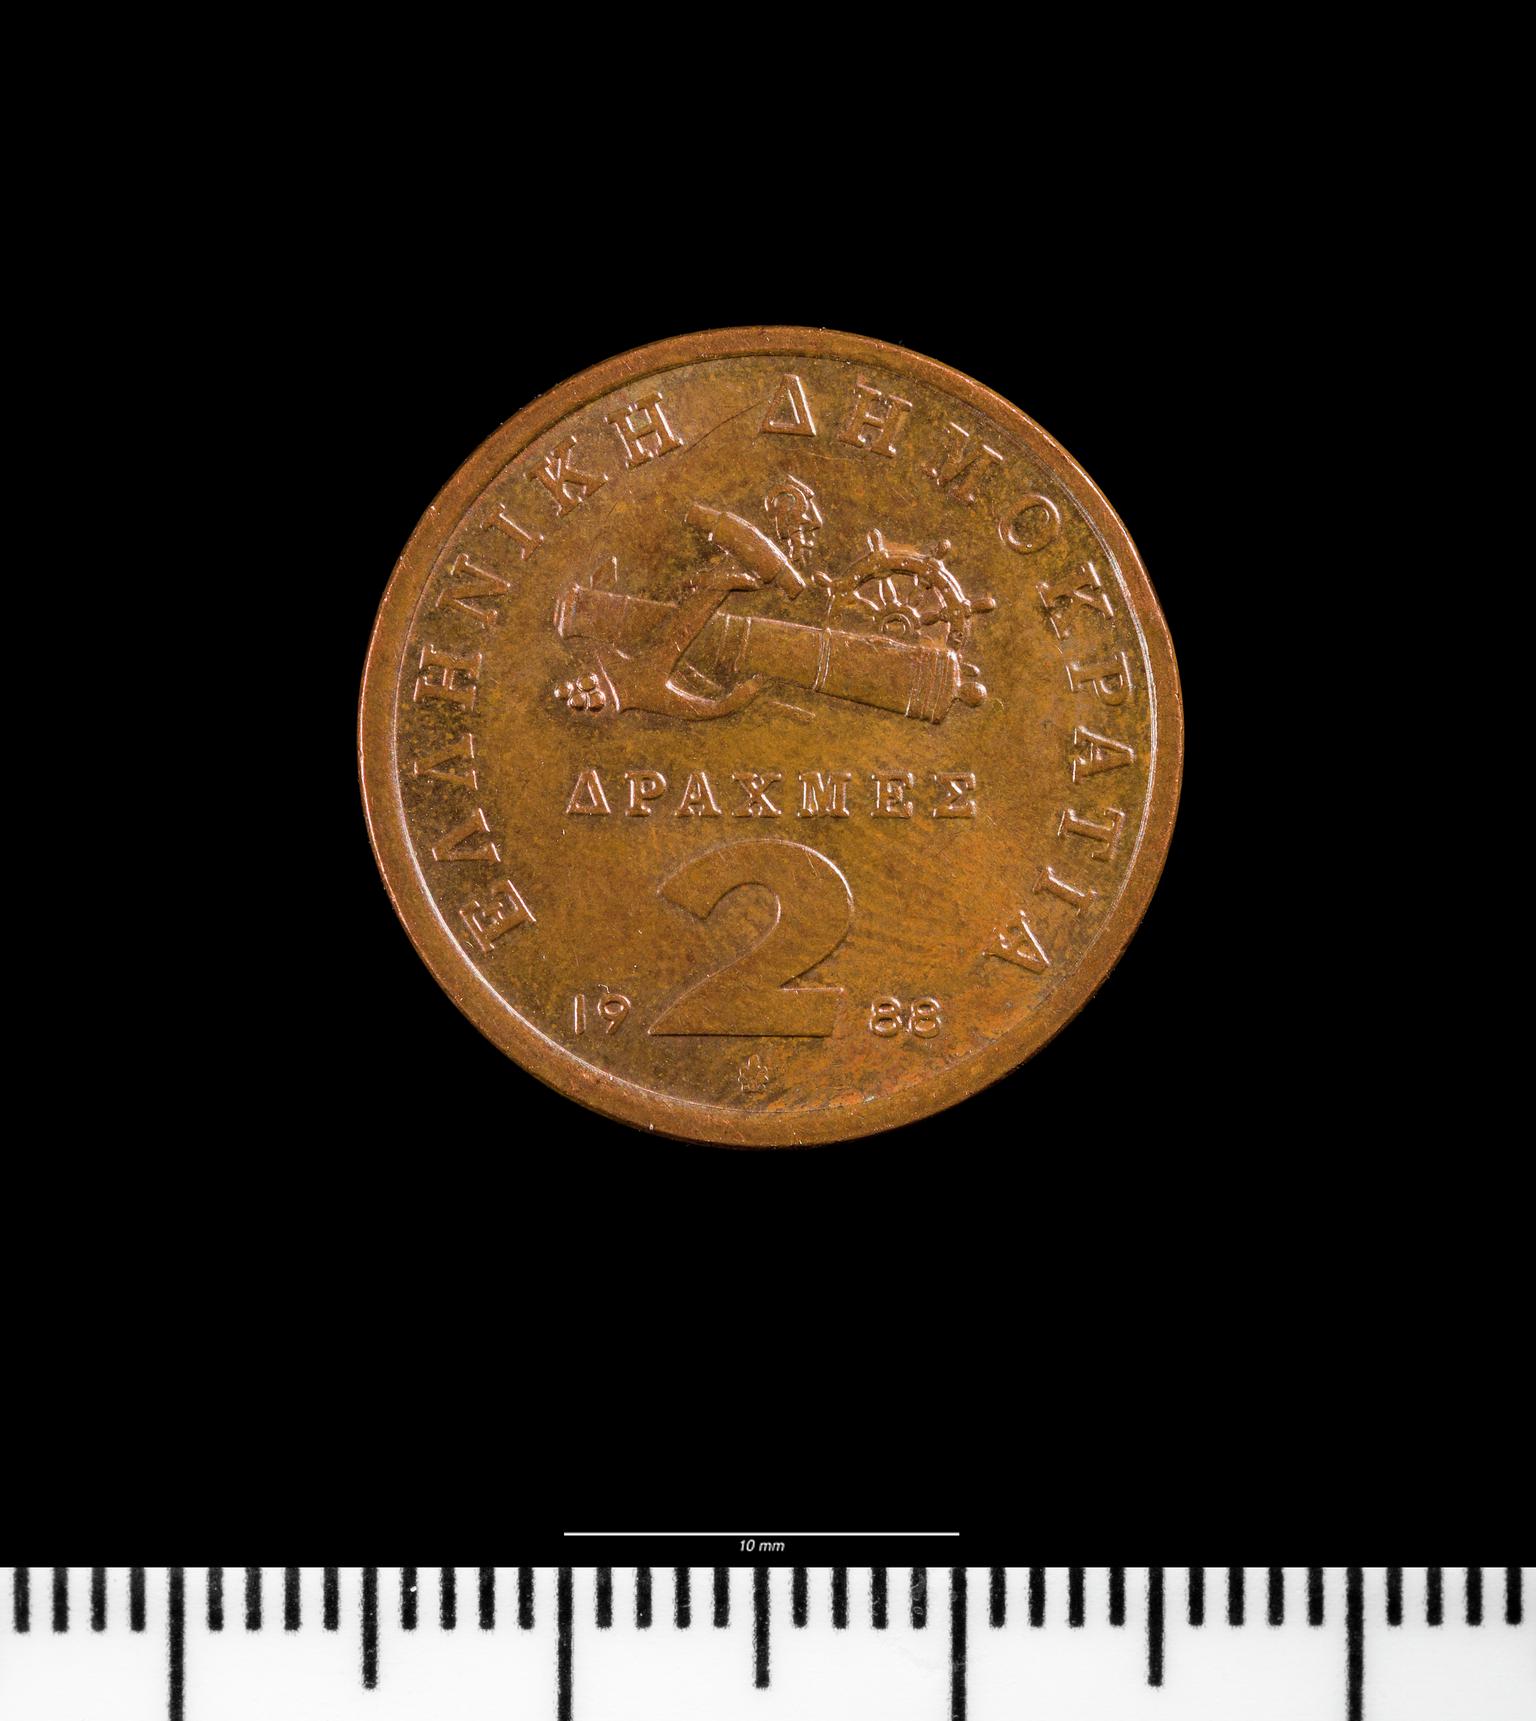 Greece (Hellenic Republic) two drachmae